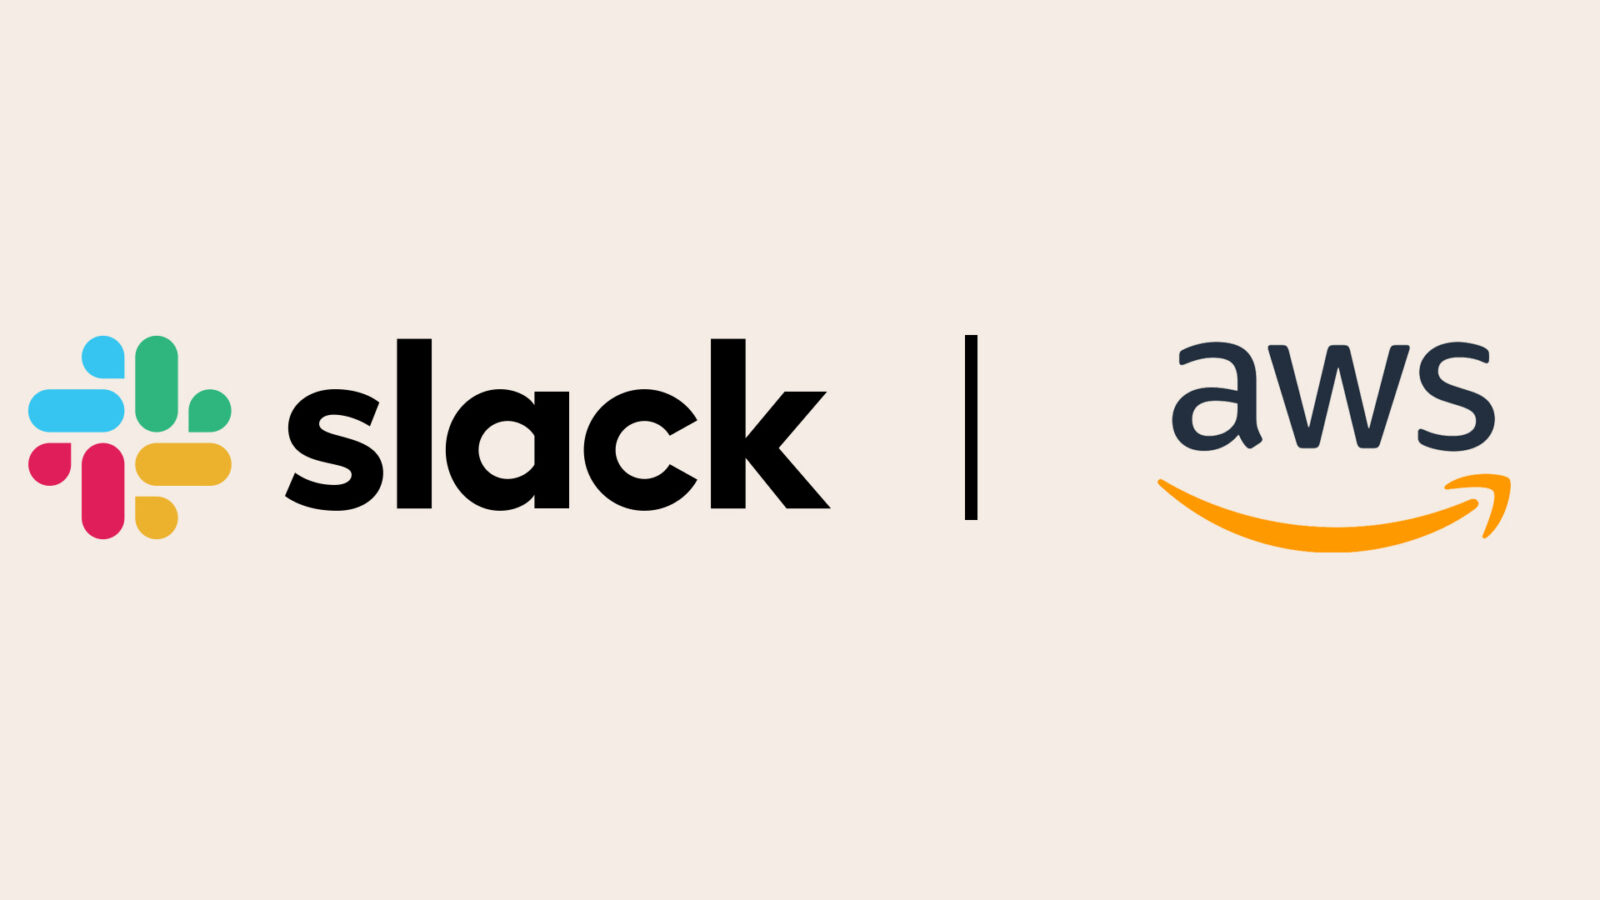 Slack to ‘Teams’ up with Amazon to Take on Microsoft Teams